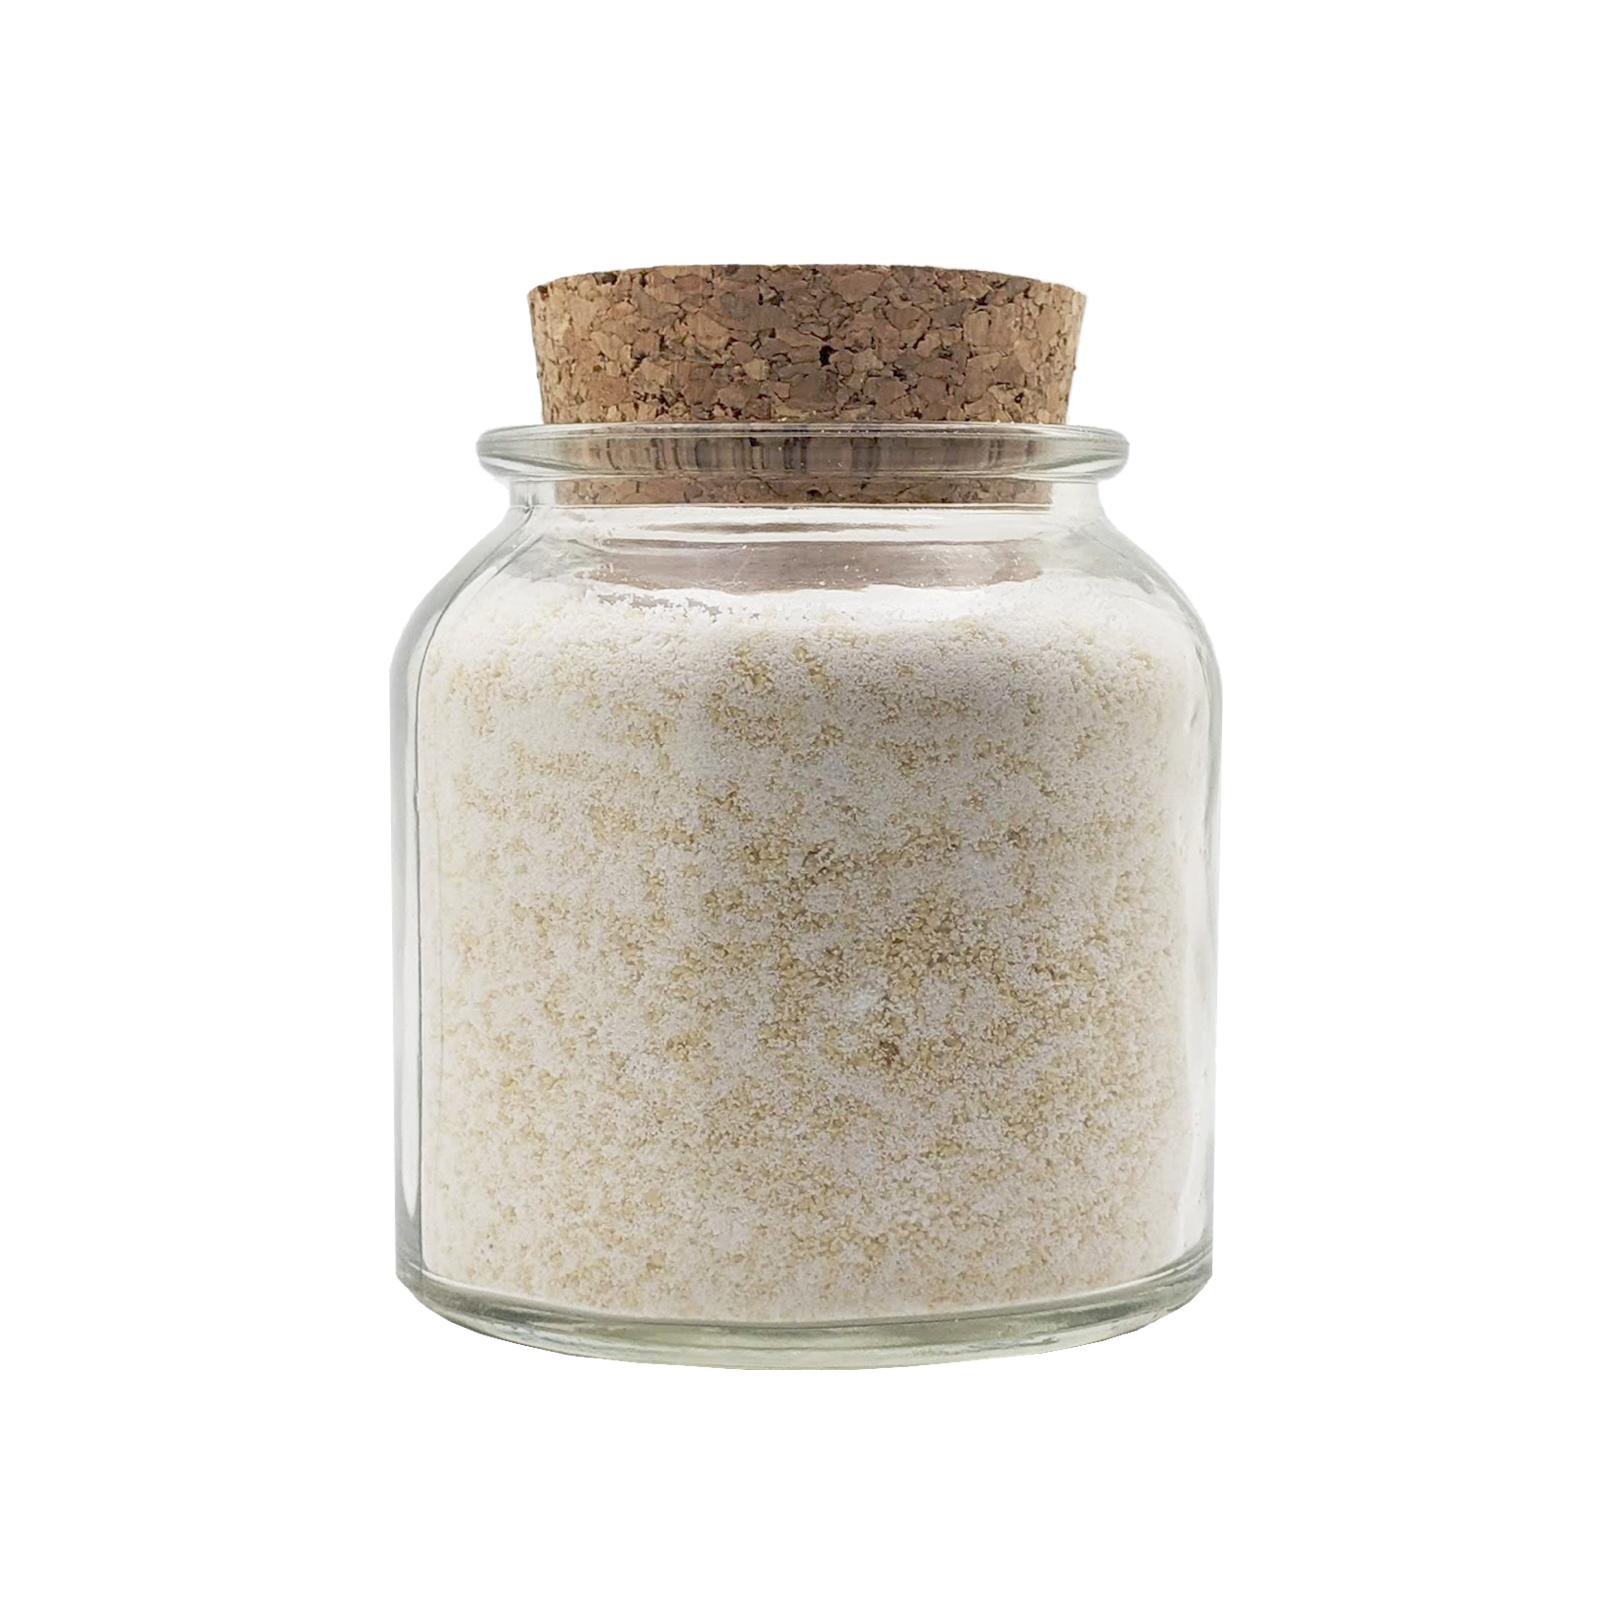 Milk and Honey Ritual Bath Soak — The Salted Pixie